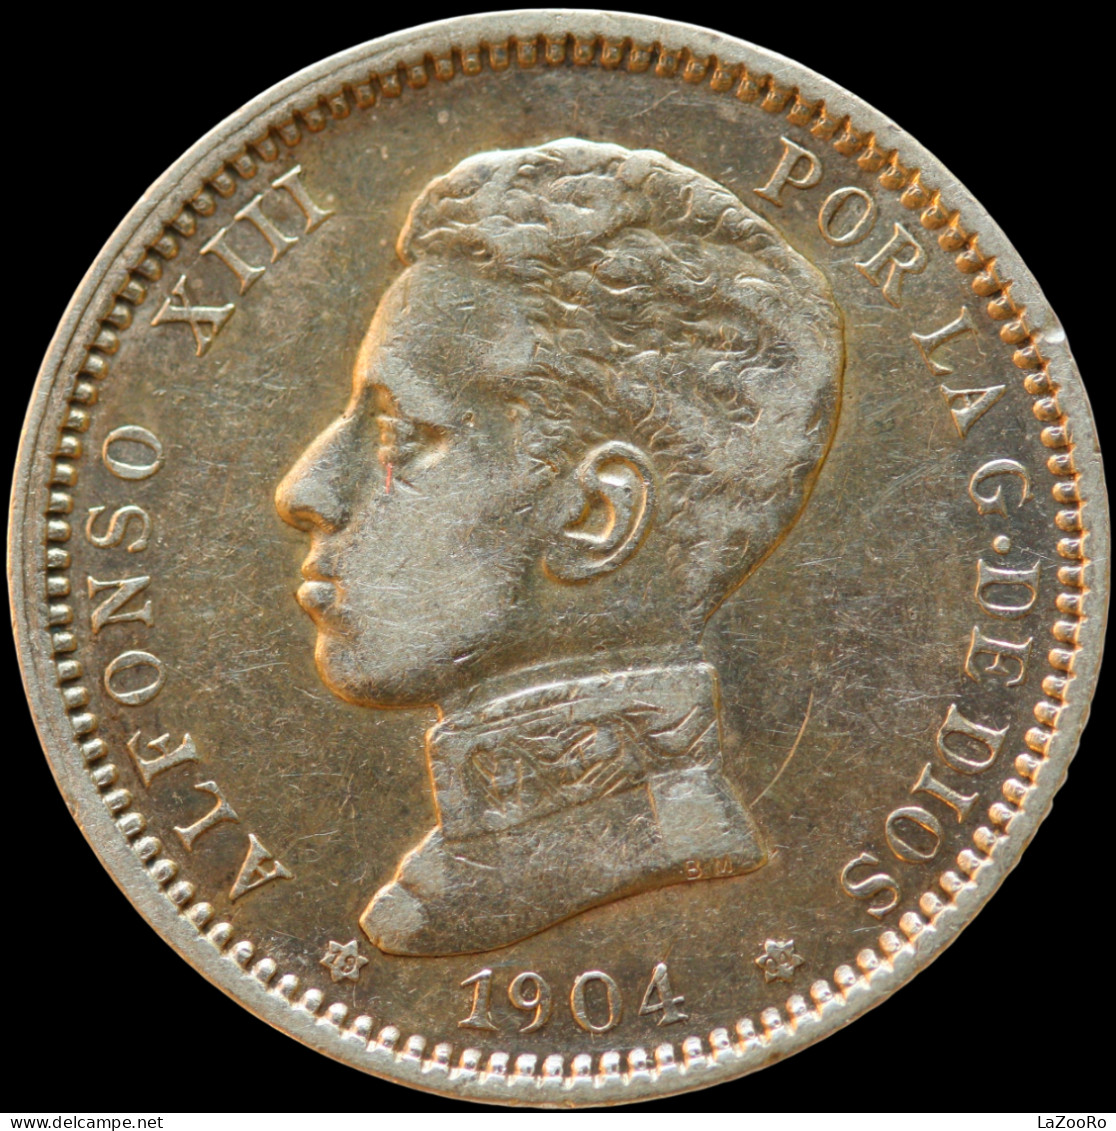 LaZooRo: Spain 1 Peseta 1904 XF - Silver - First Minting